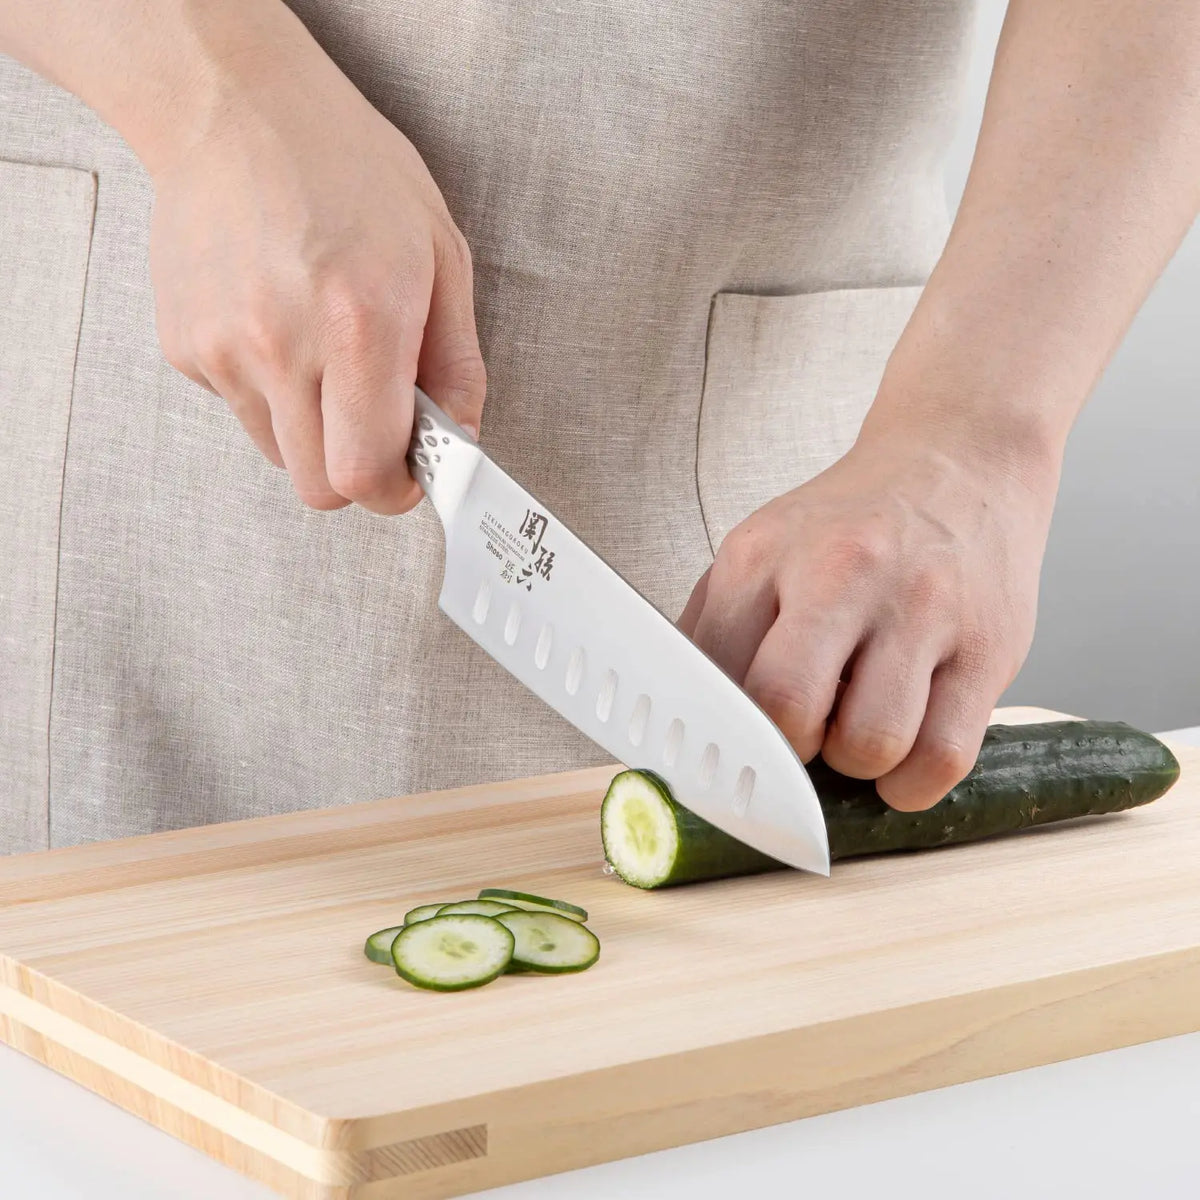 Set de 4 couteaux Kai Seki magoroku Serie AOFUJI chef santoku Japon - Osaka  Tools